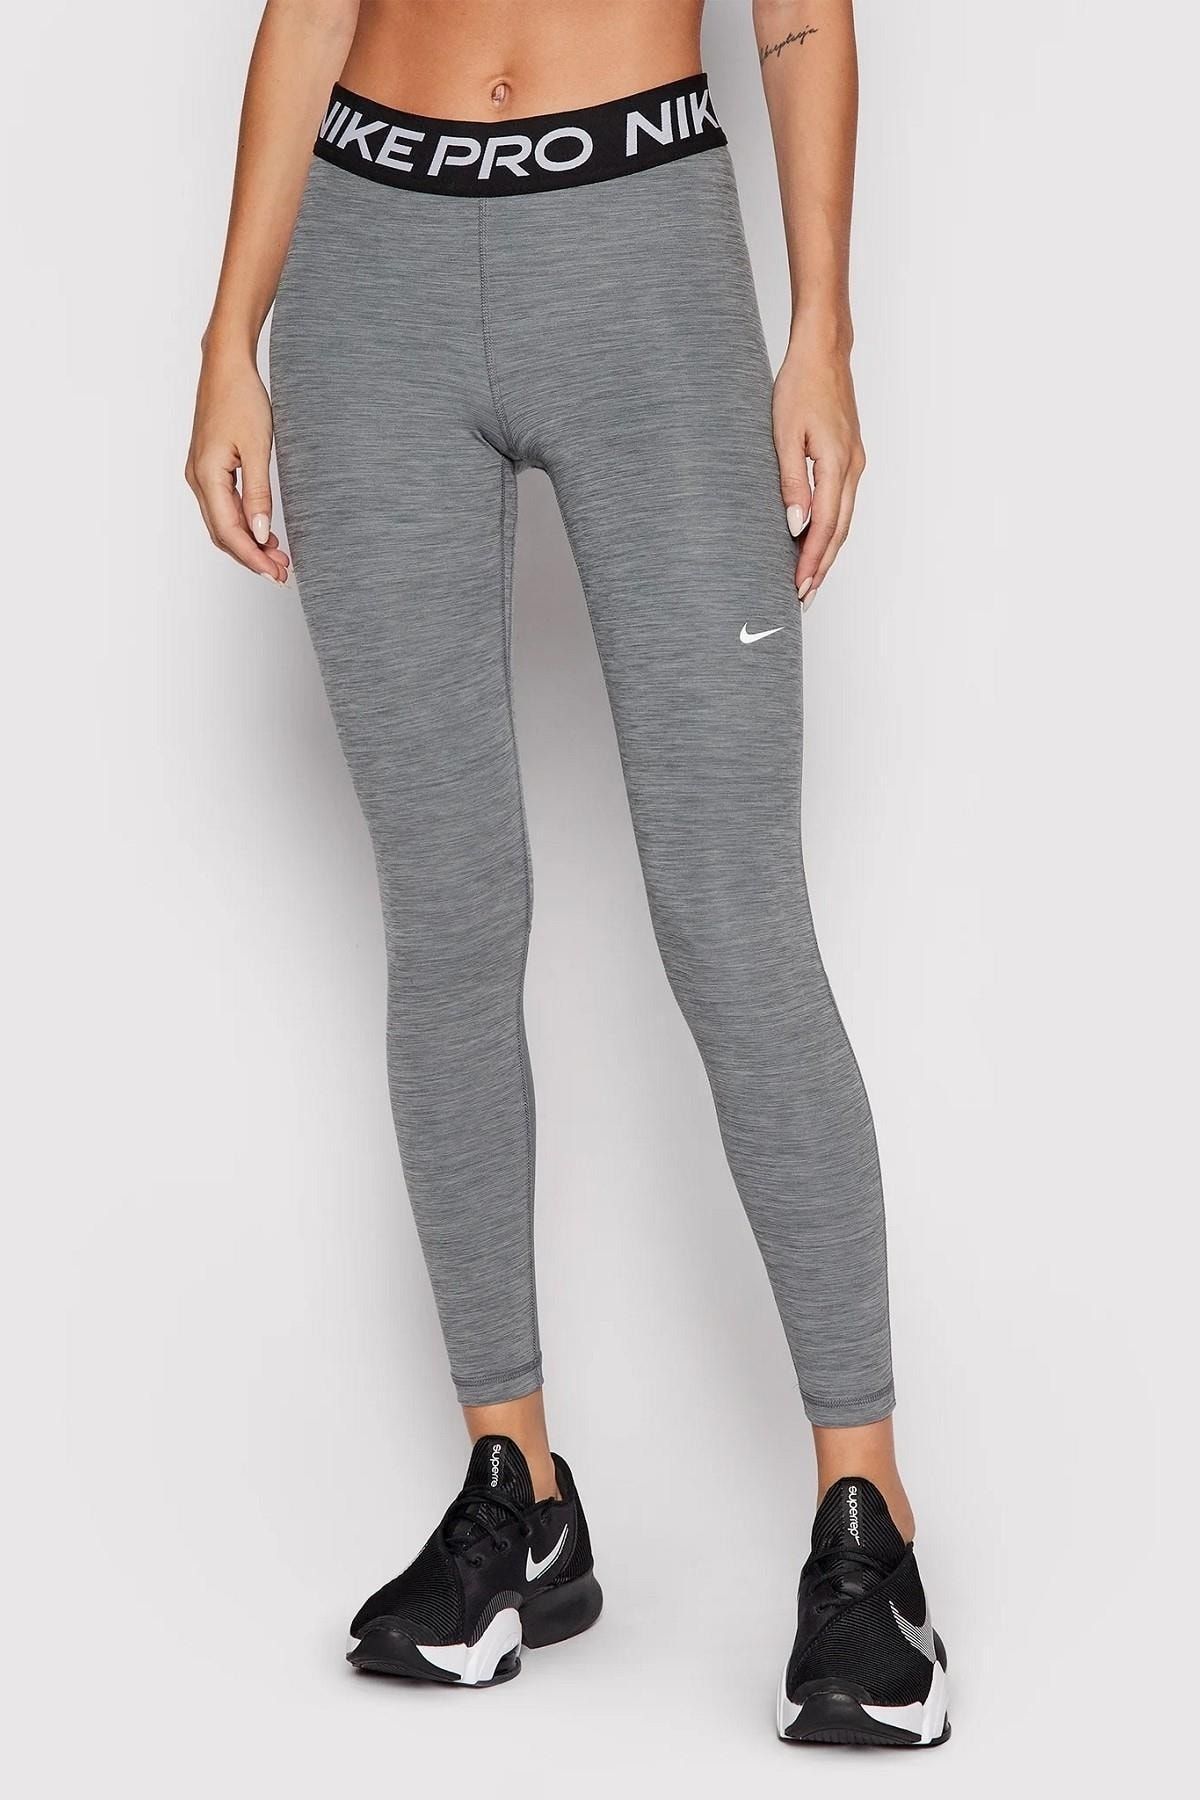 Discover 141+ grey nike pro leggings latest